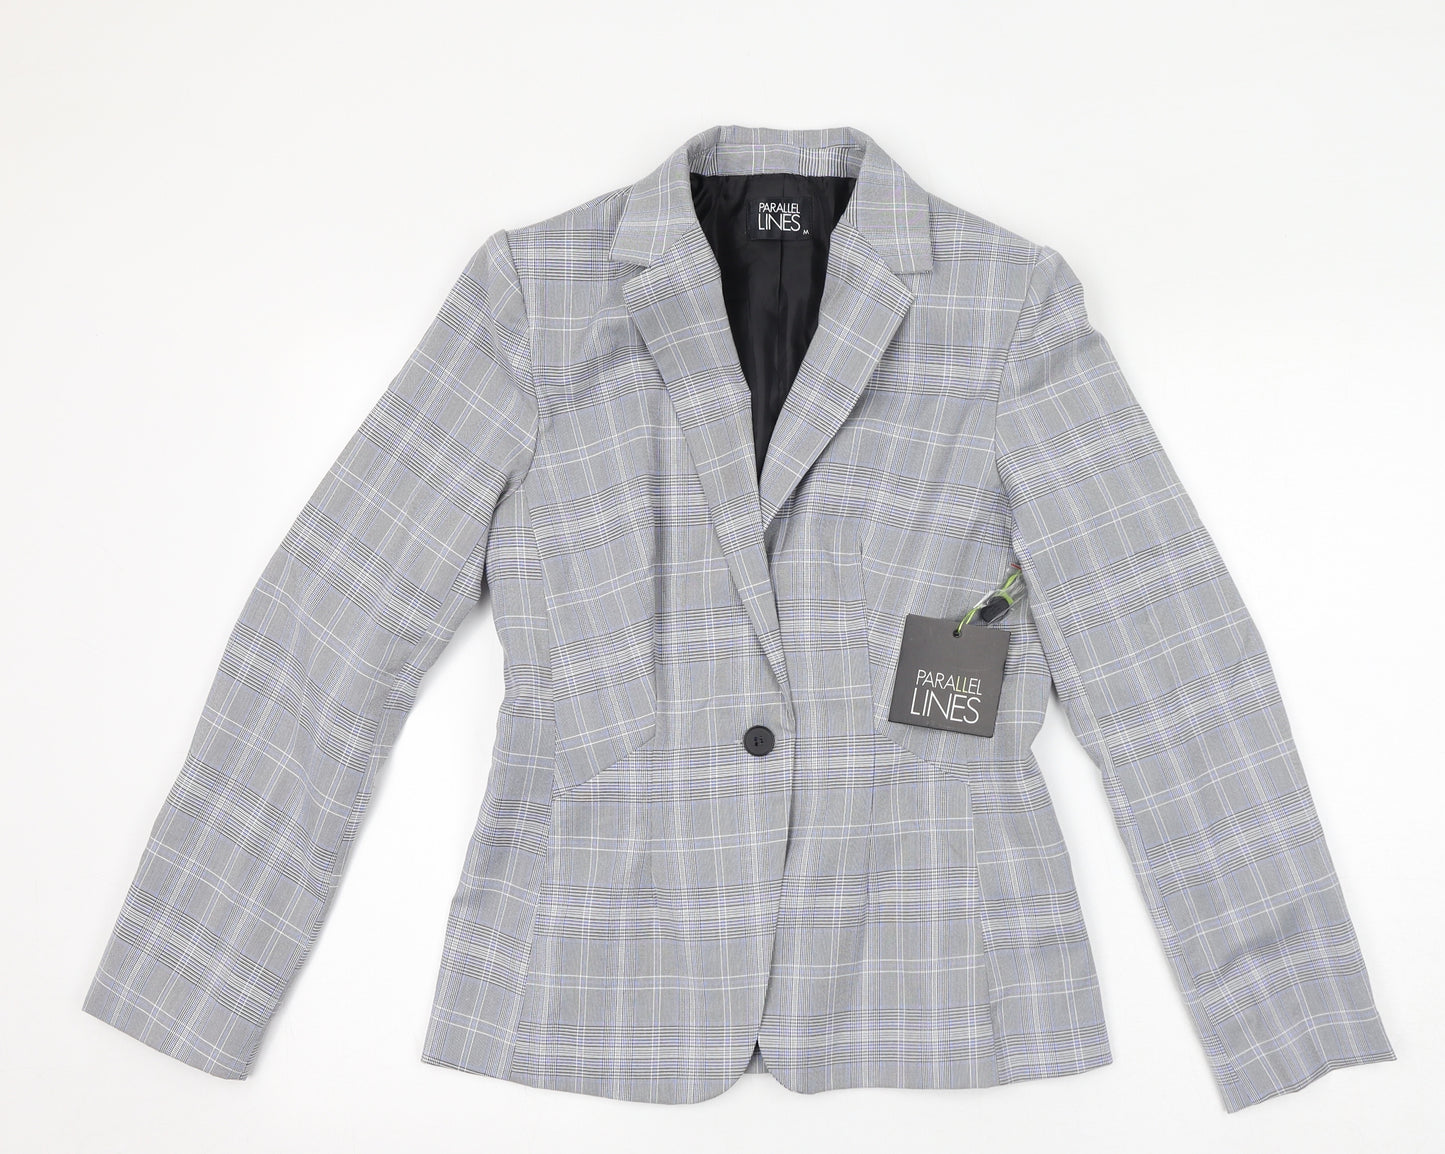 Parallel Womens Grey Geometric Jacket Blazer Size M Button